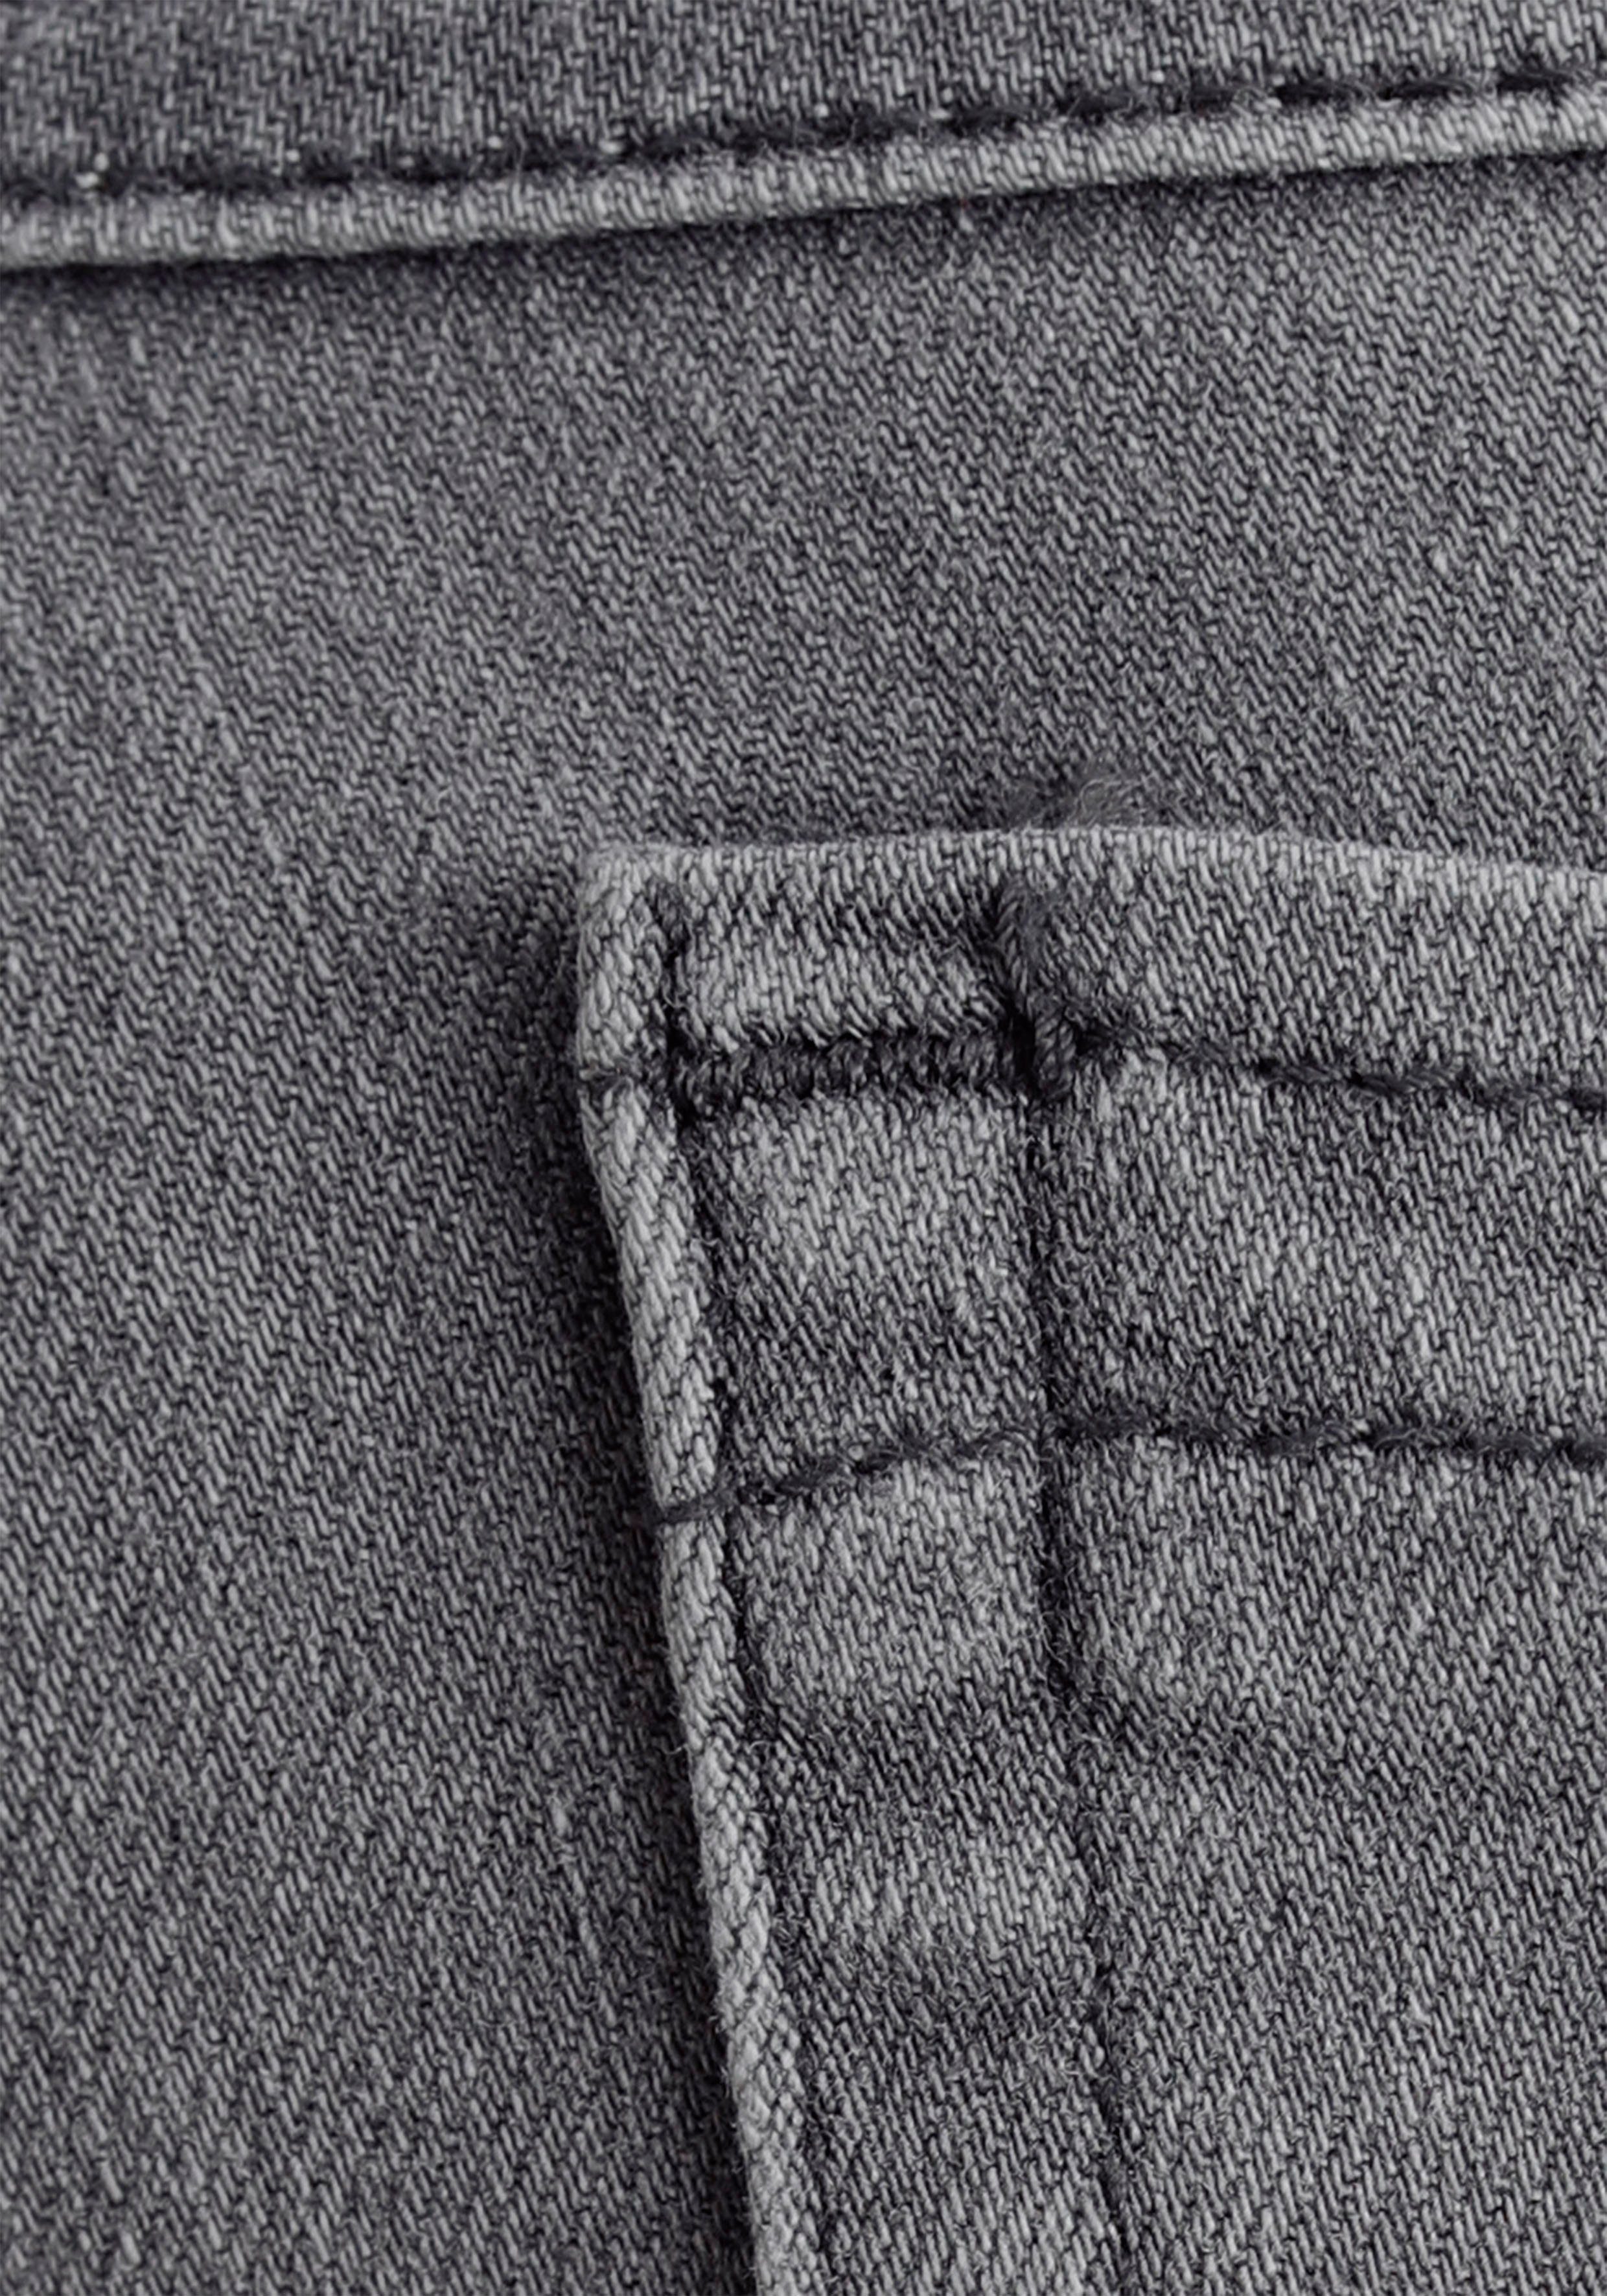 grey Regular-fit-Jeans dark Hechter Daniel